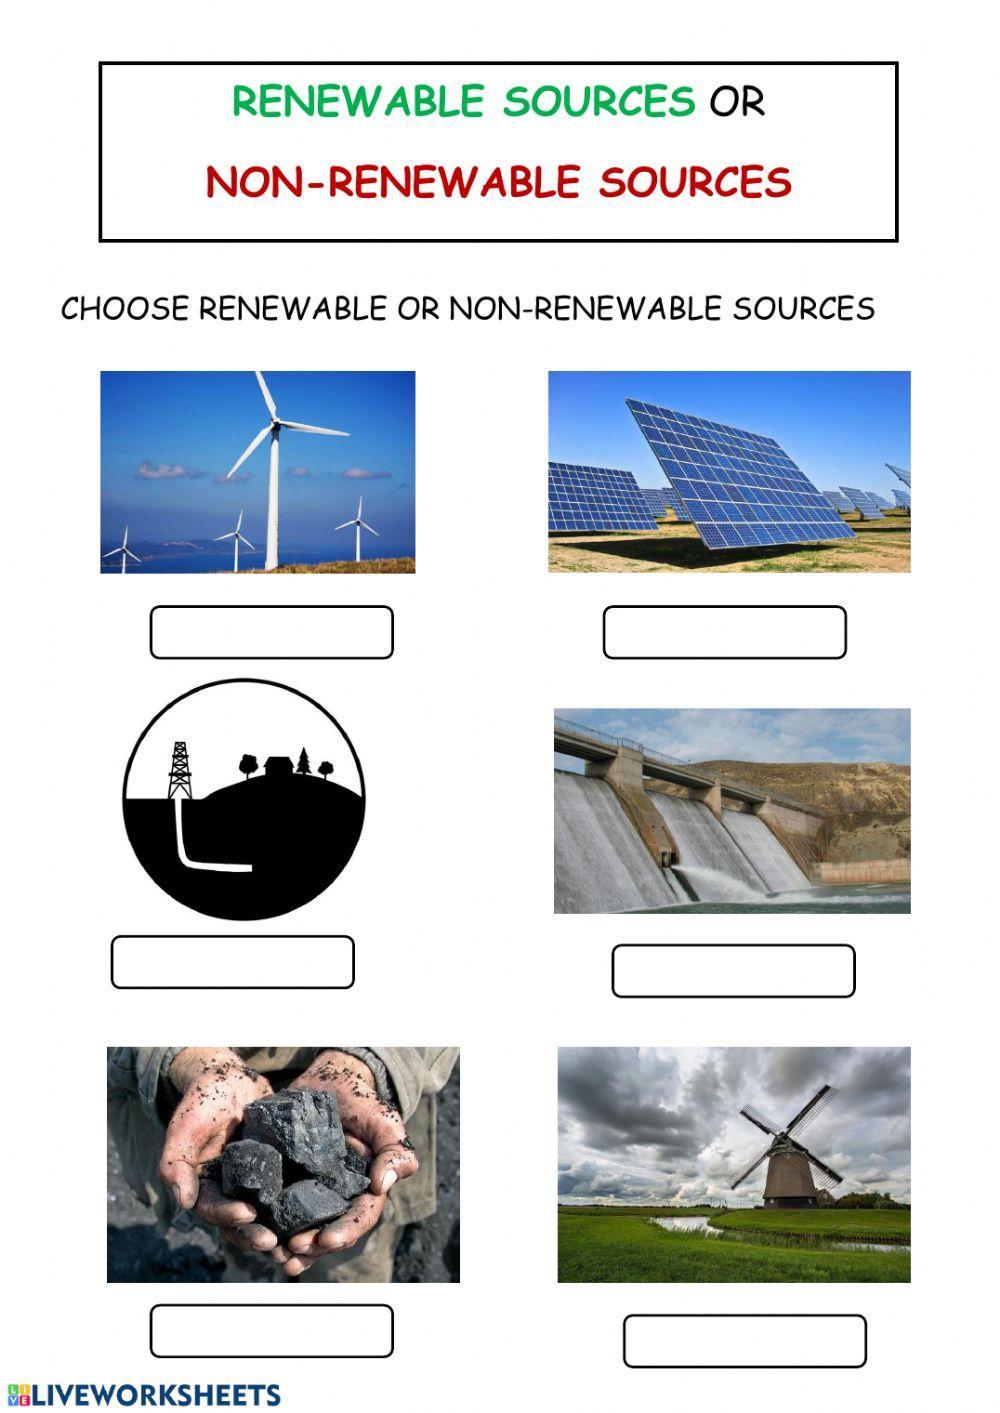 Renewable or non-renewable